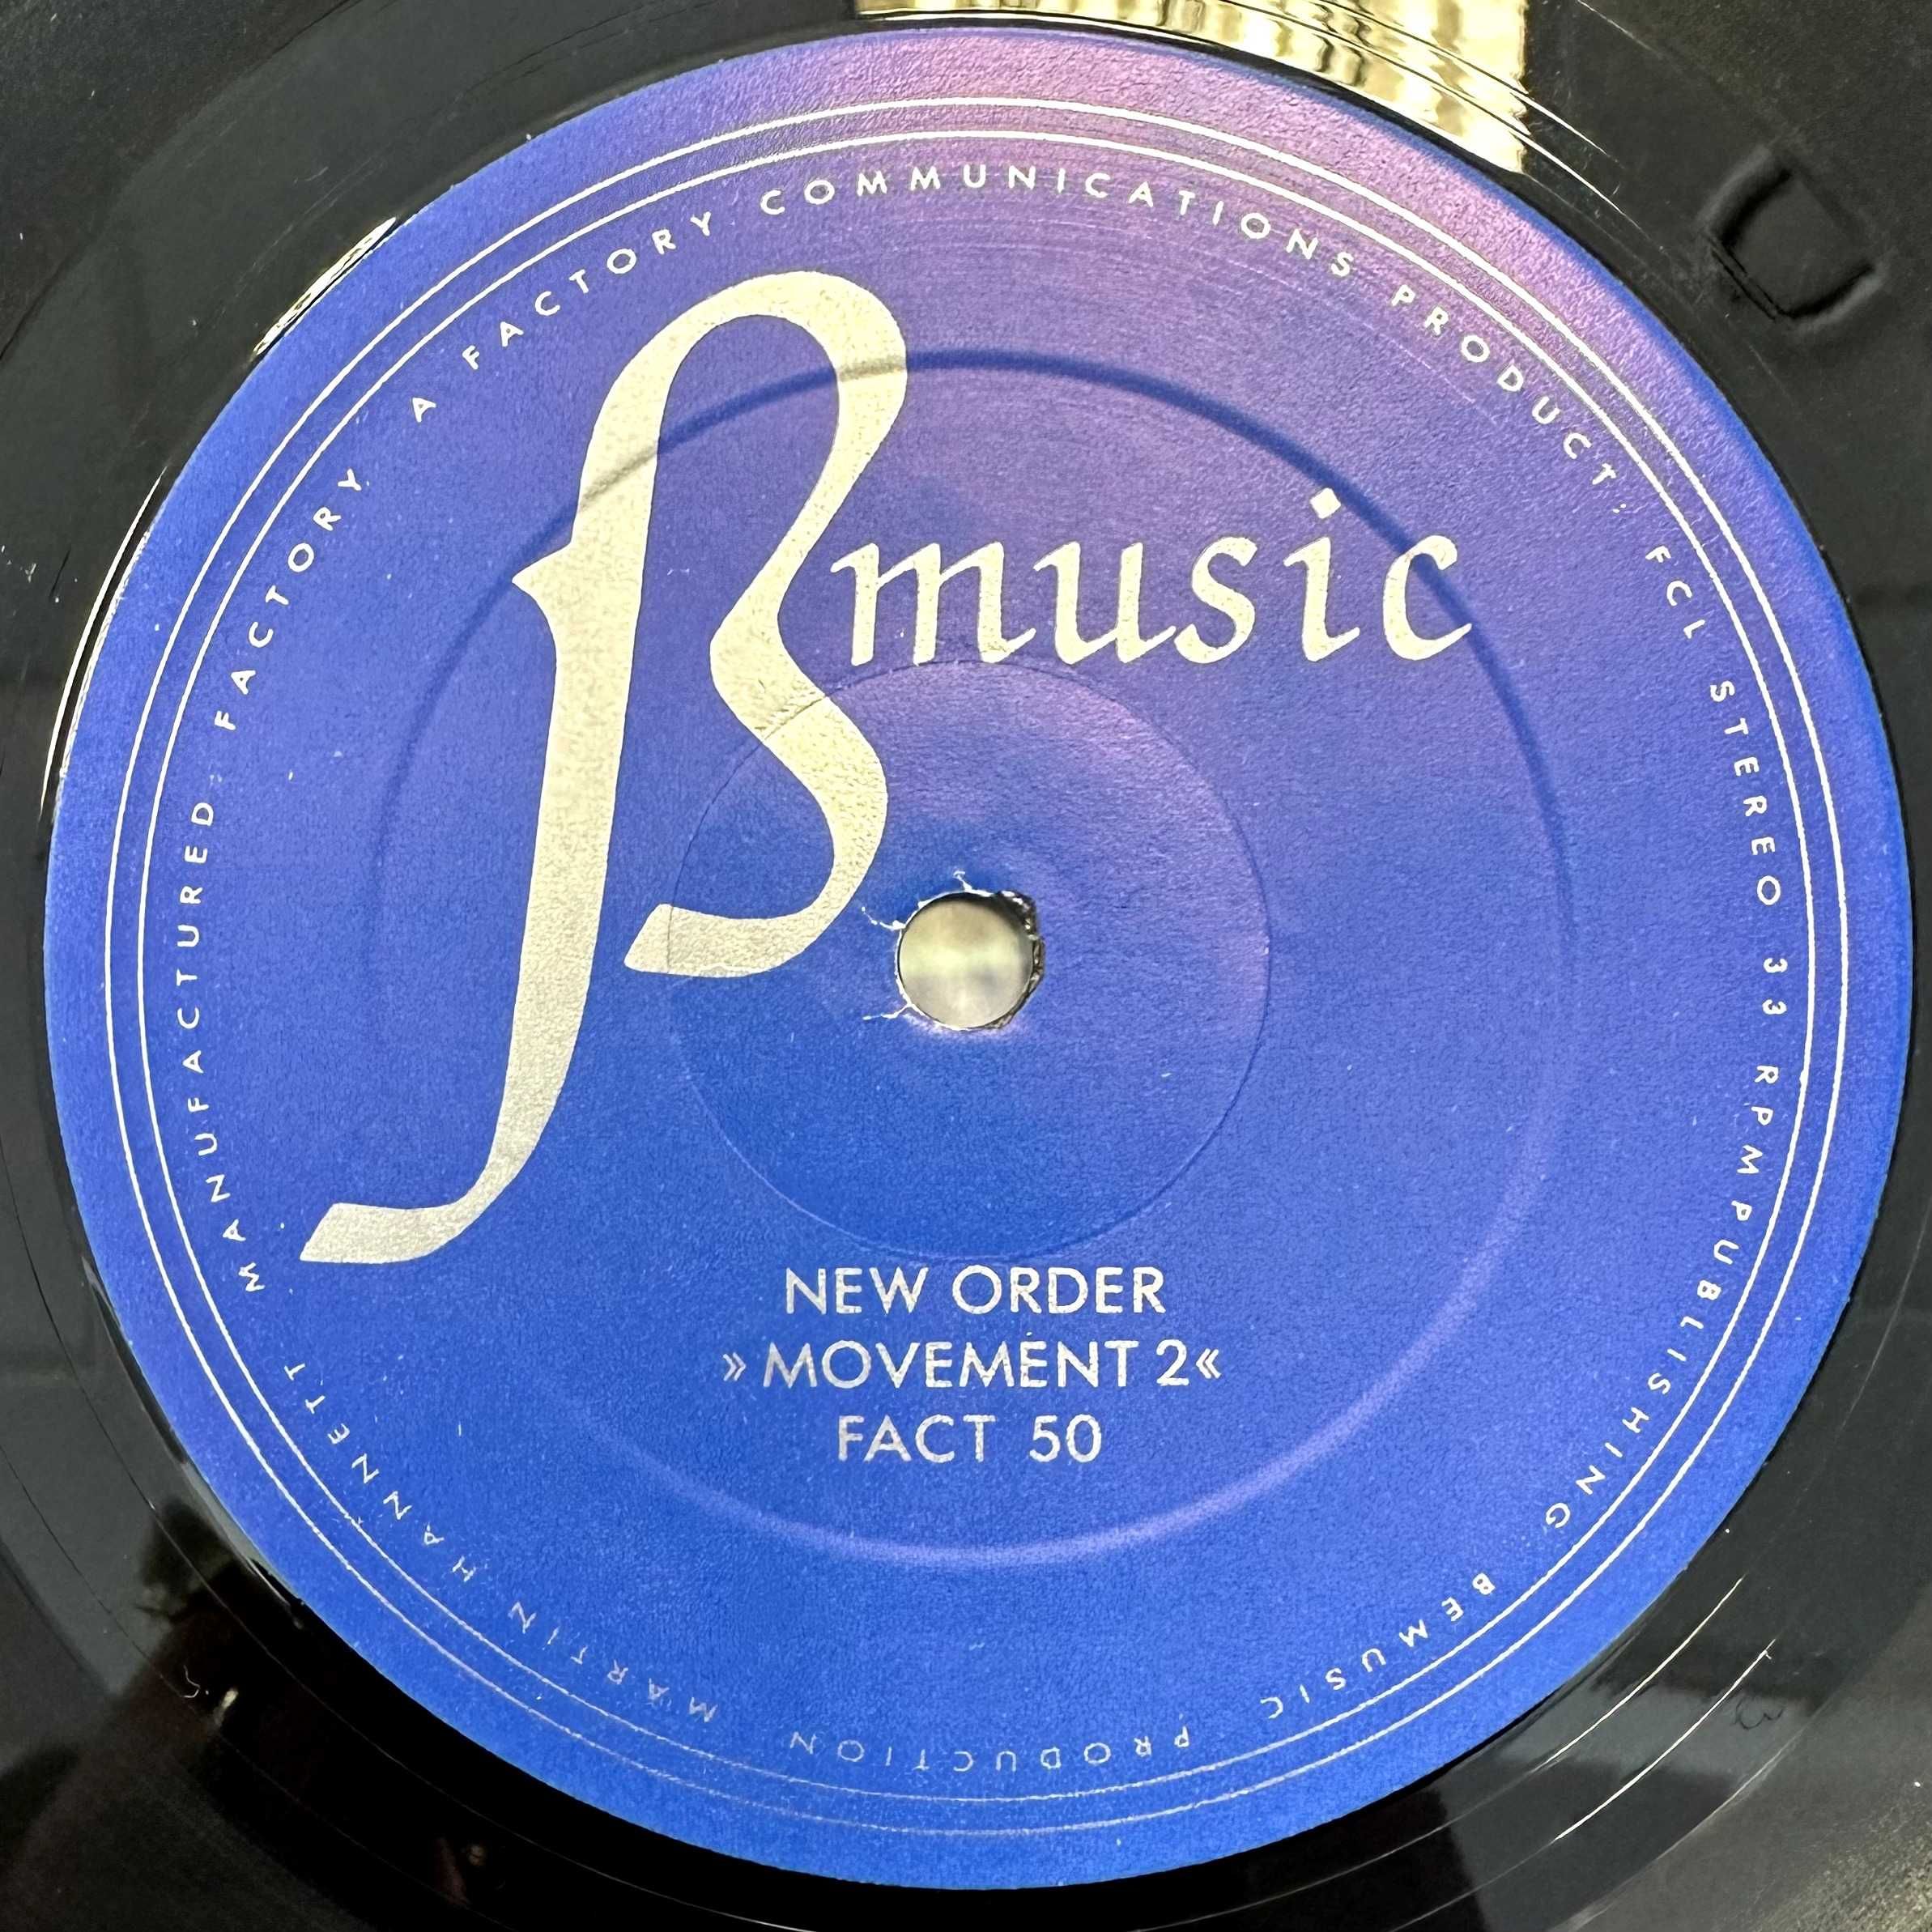 New Order - Movement (Vinyl, 1981, UK)